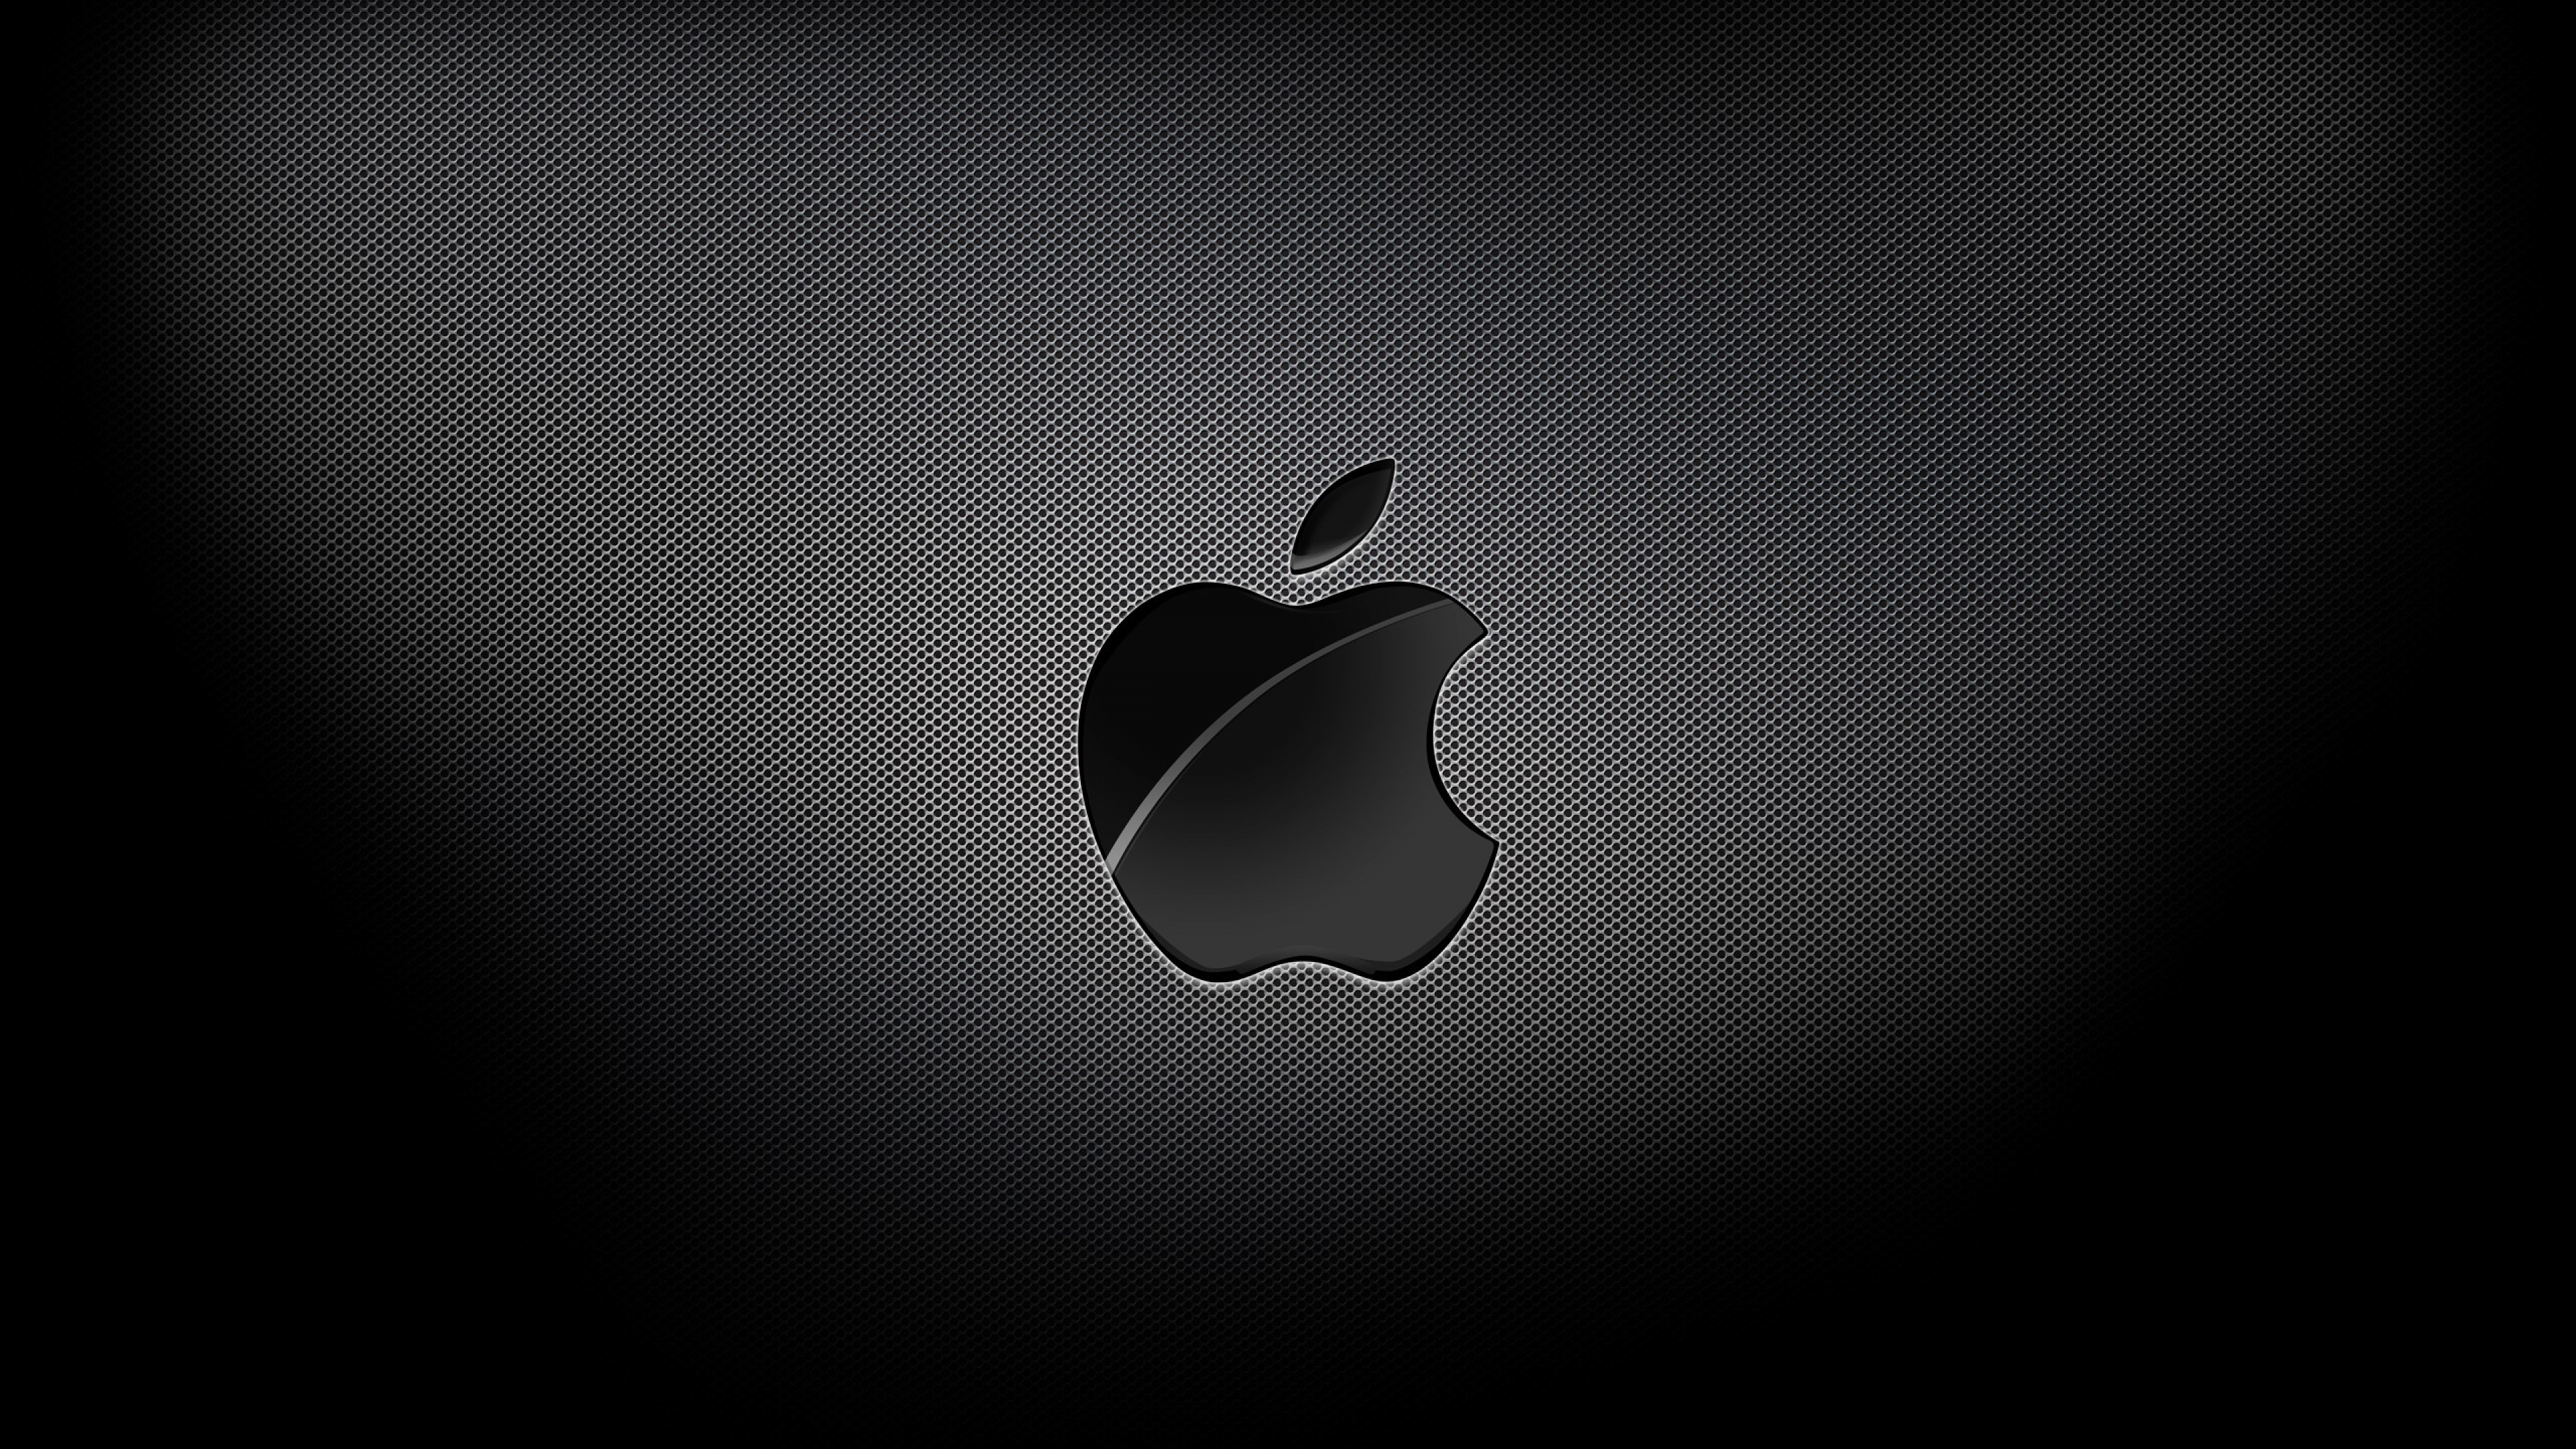 apple mac brand logo dark light shadow 44045 3840x2160jpg3Forig3D3 3840x2160